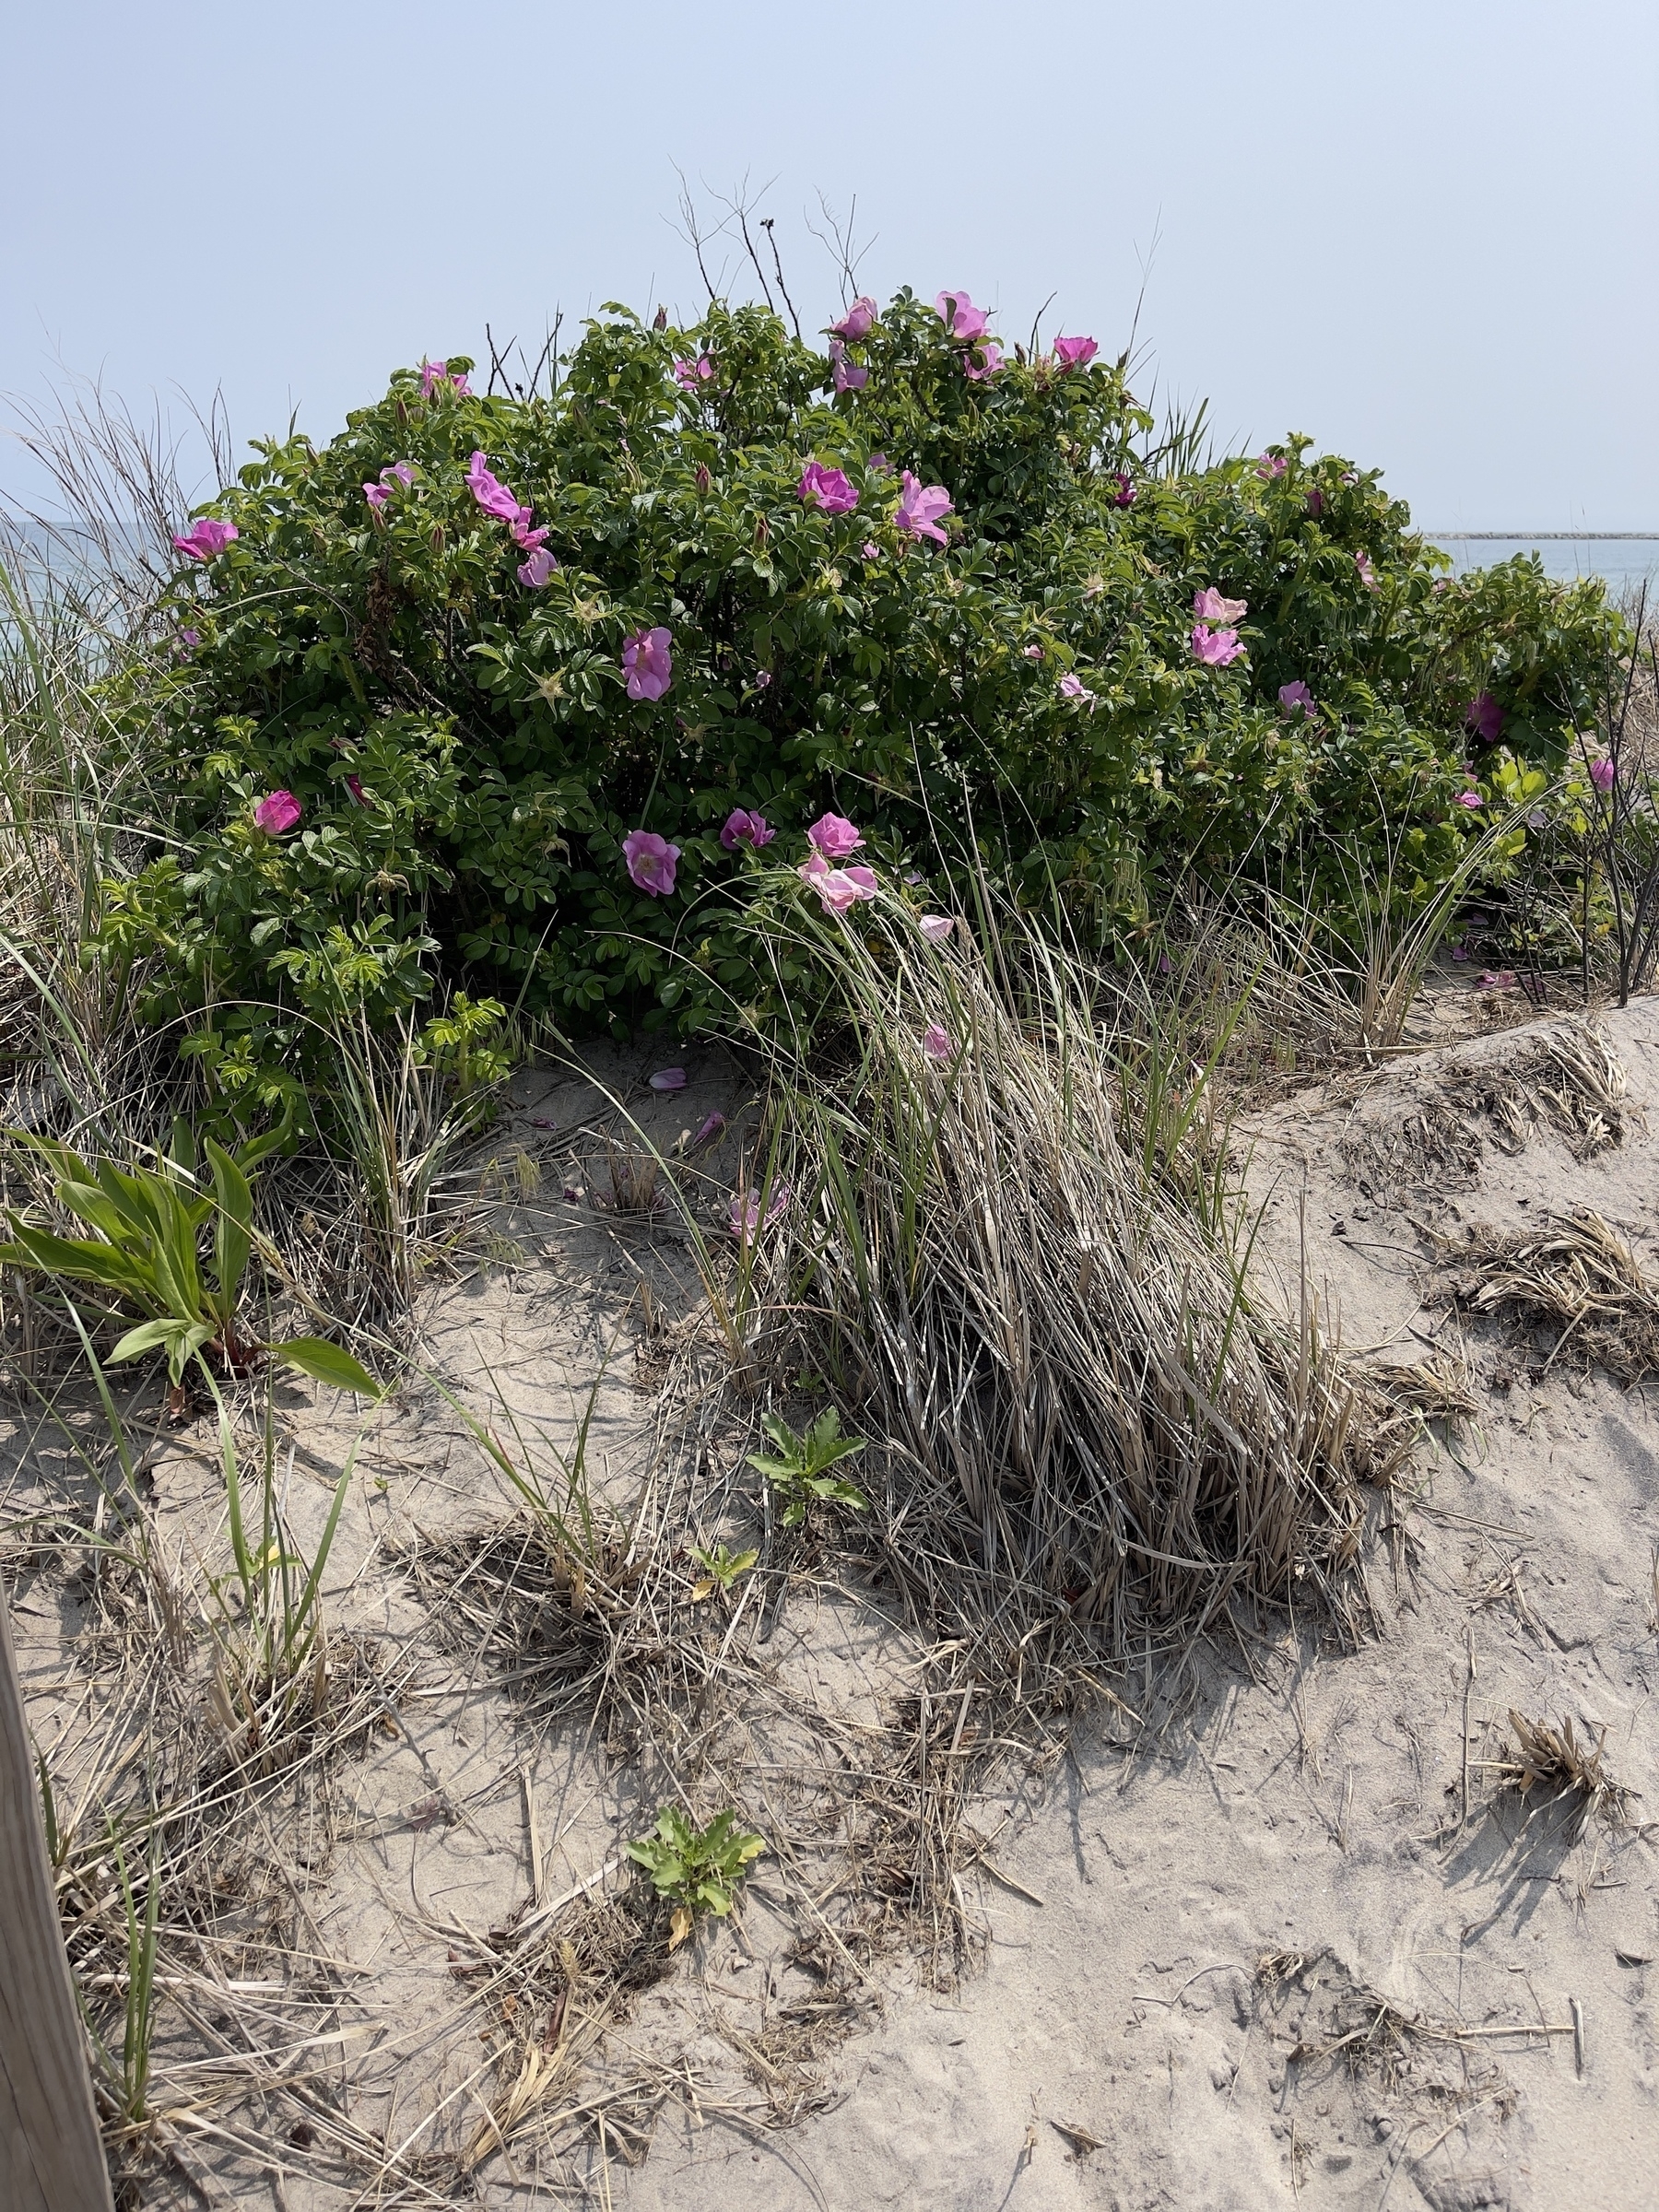 Beach rose bush, pink flowers.